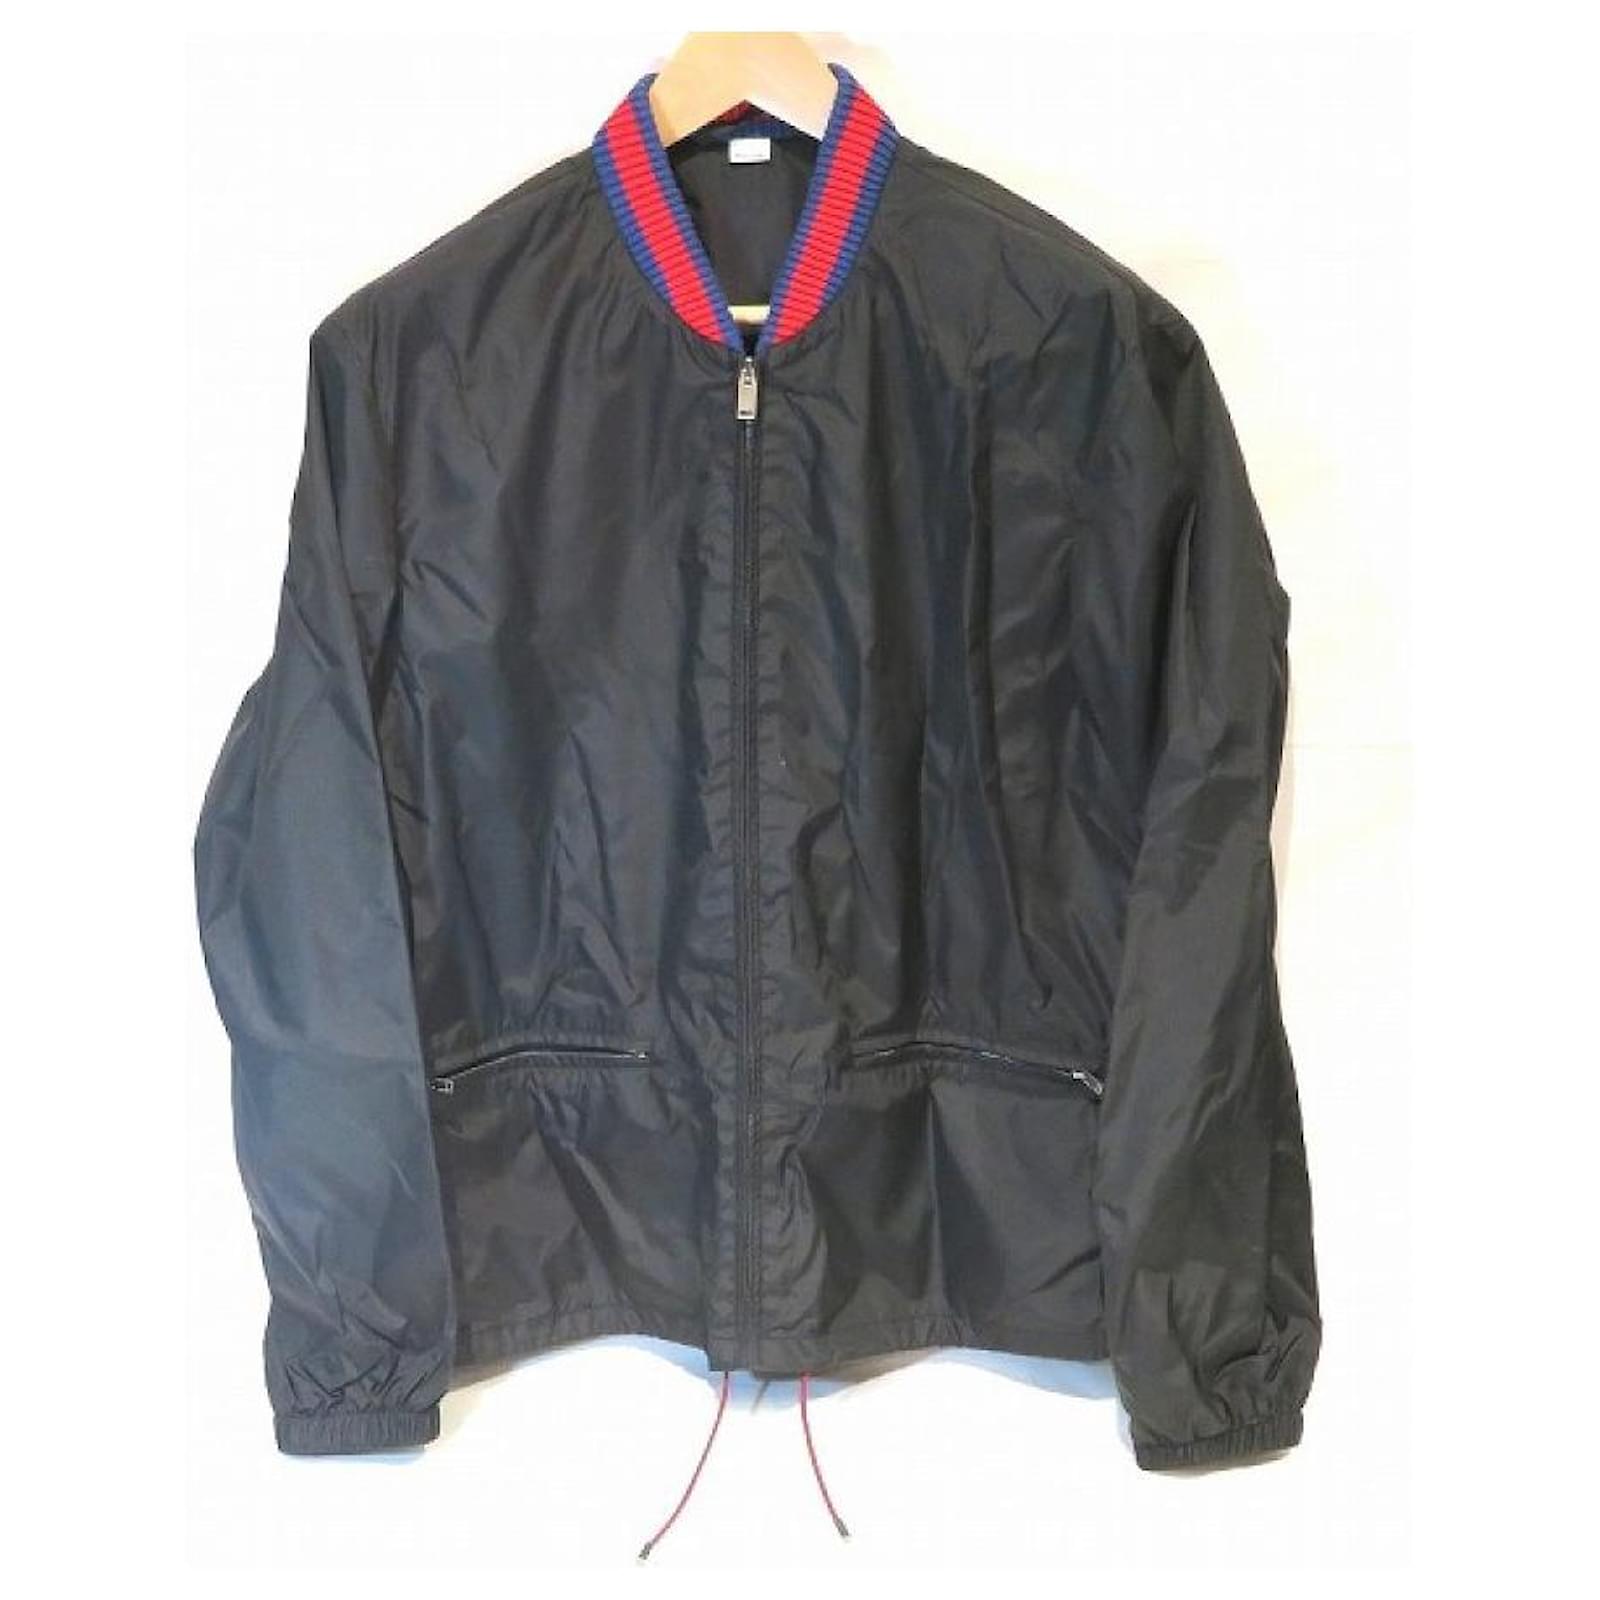 GUCCI 451121 Kingsnake Nylon Blouson Black Size 52 Apparel Jacket